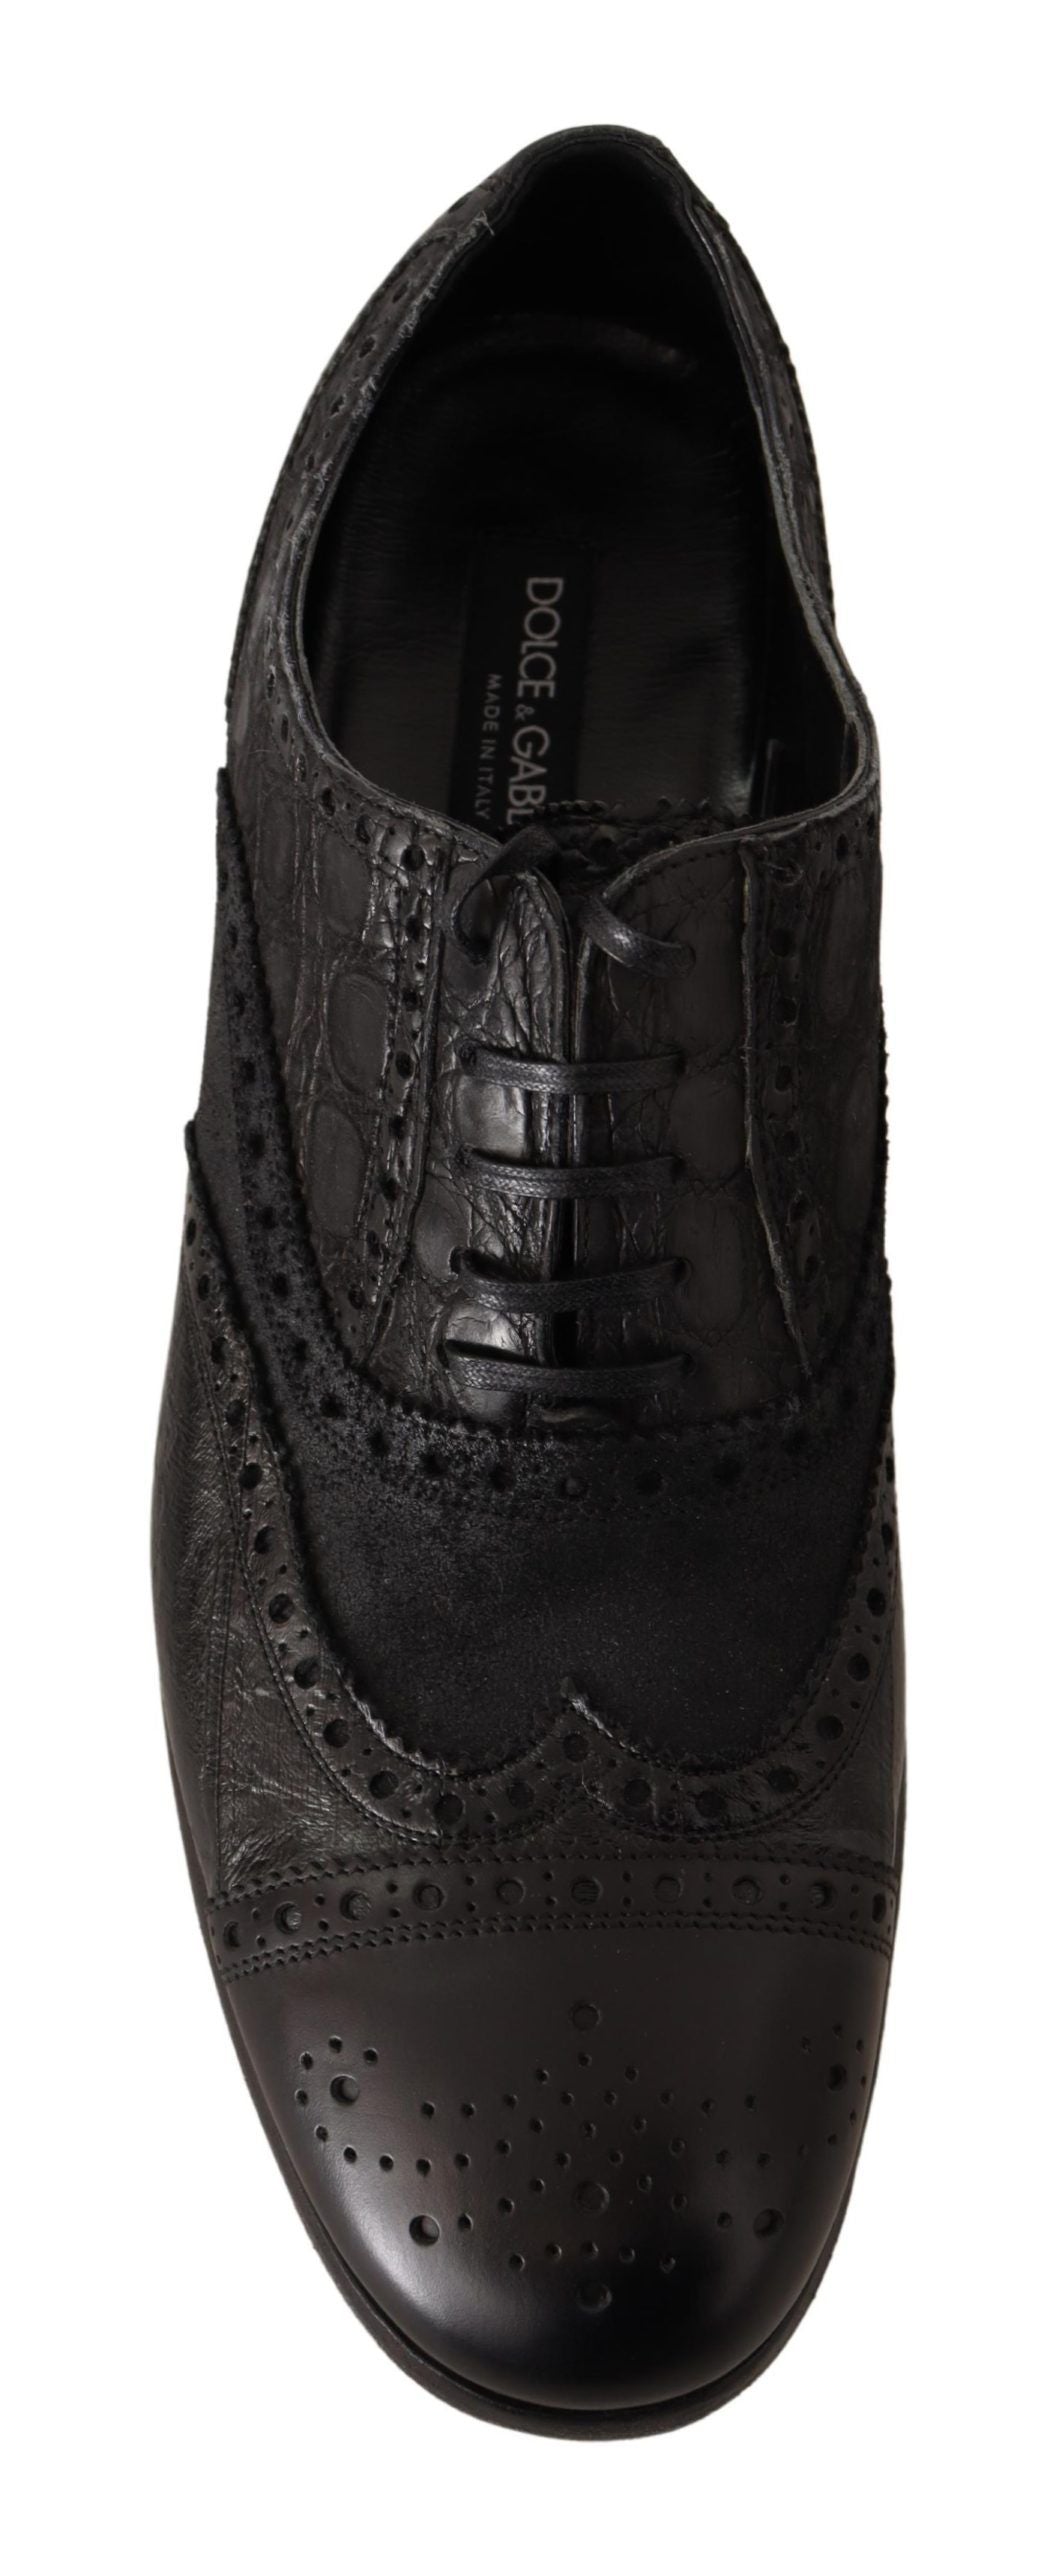 Dolce & Gabbana in pelle nera Brogue Wing Suggerimenti Scarpe formali